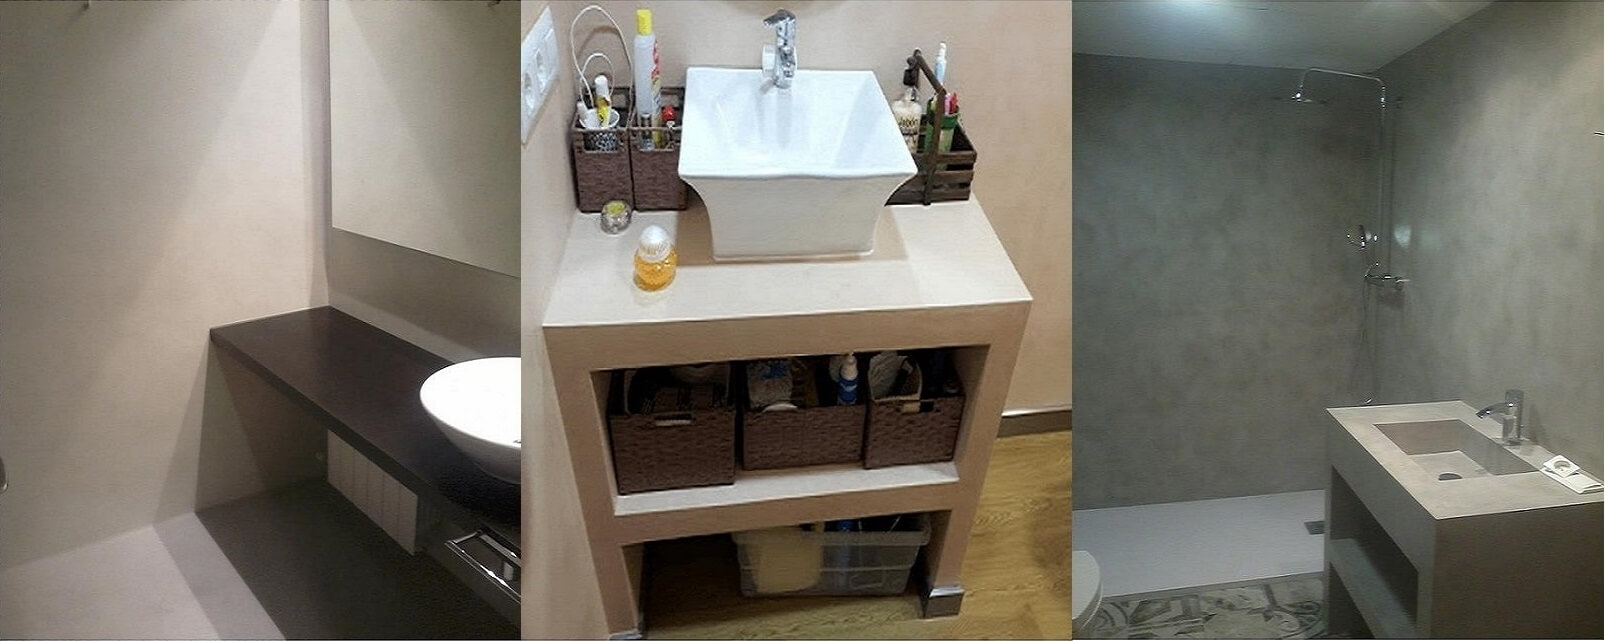  aplicadores de microcemento en baños obras realizadas en valencia